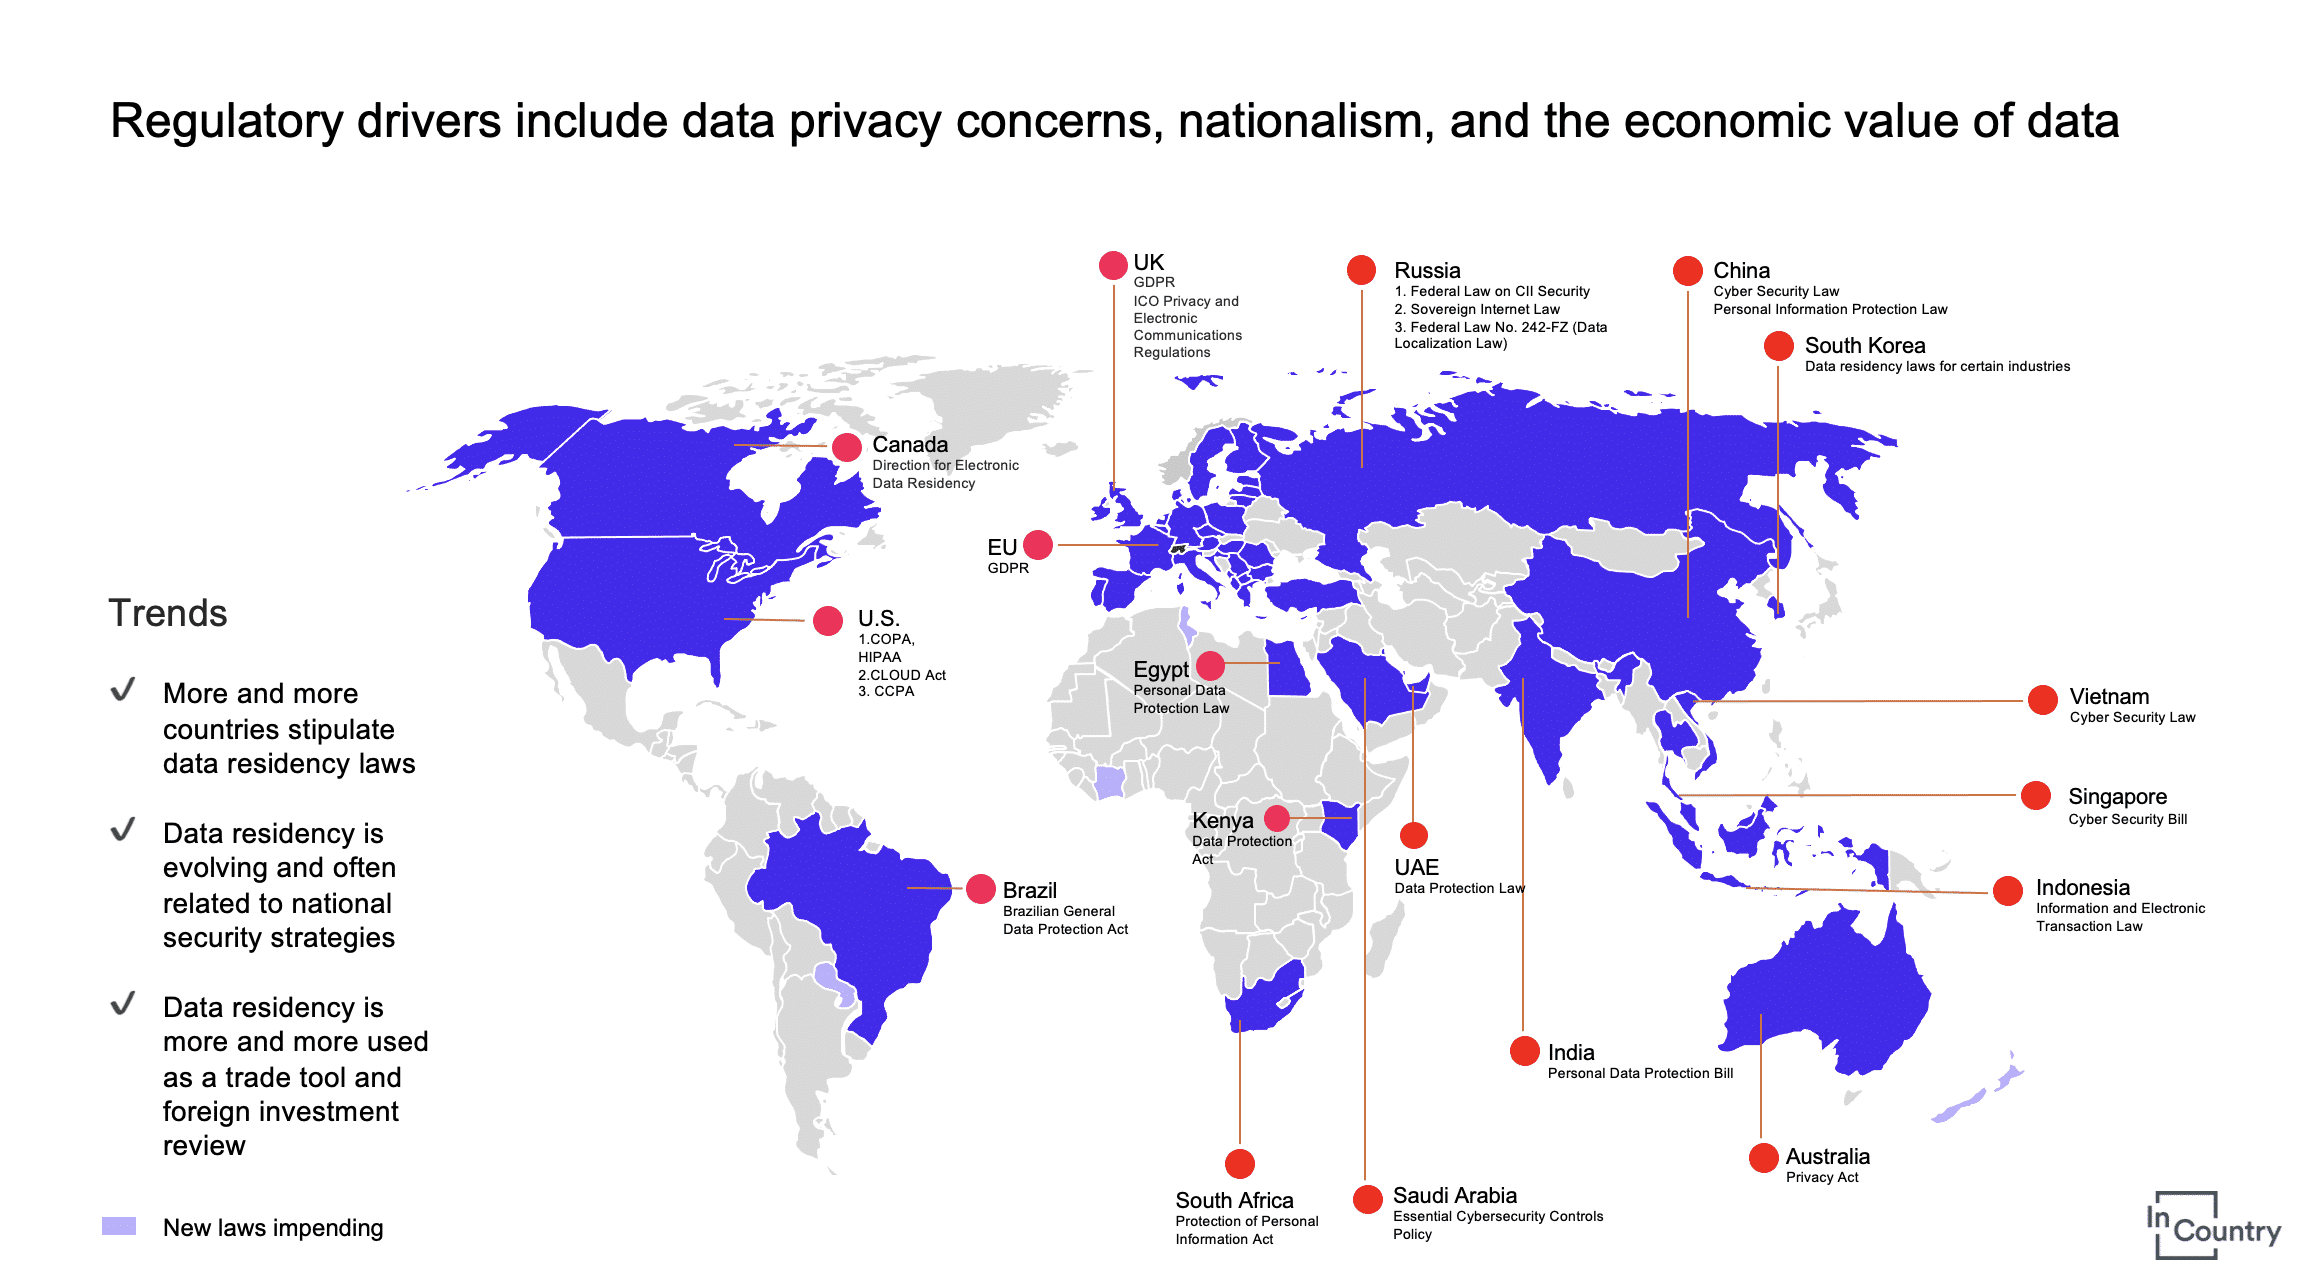 Global privacy regulations